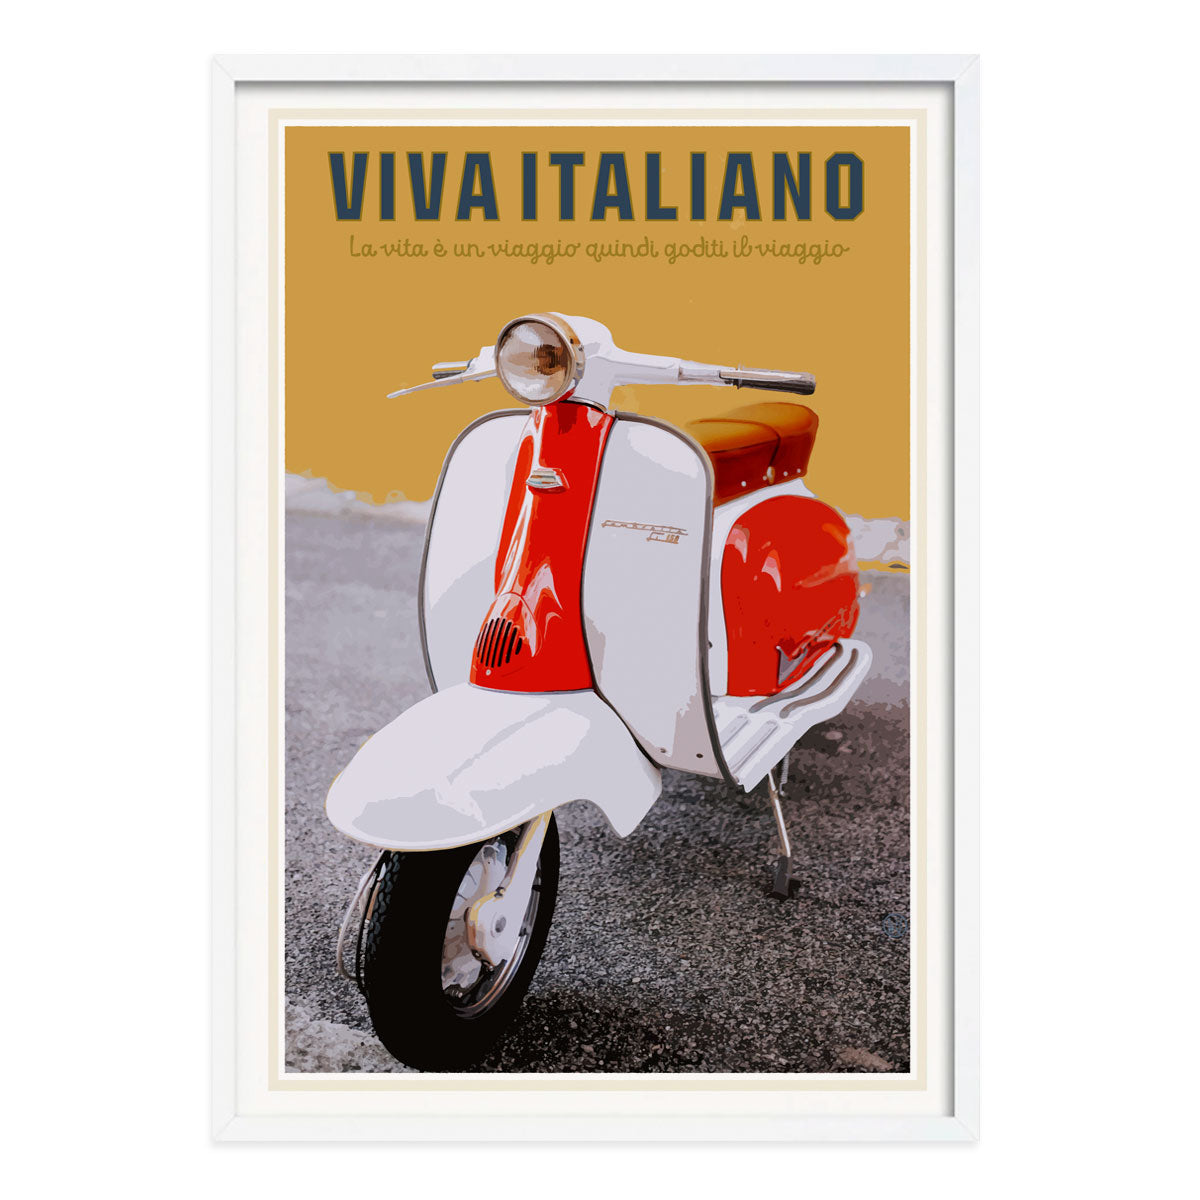 Viva Italia Lambretta retro vintage poster print in white frame by Places We Luv